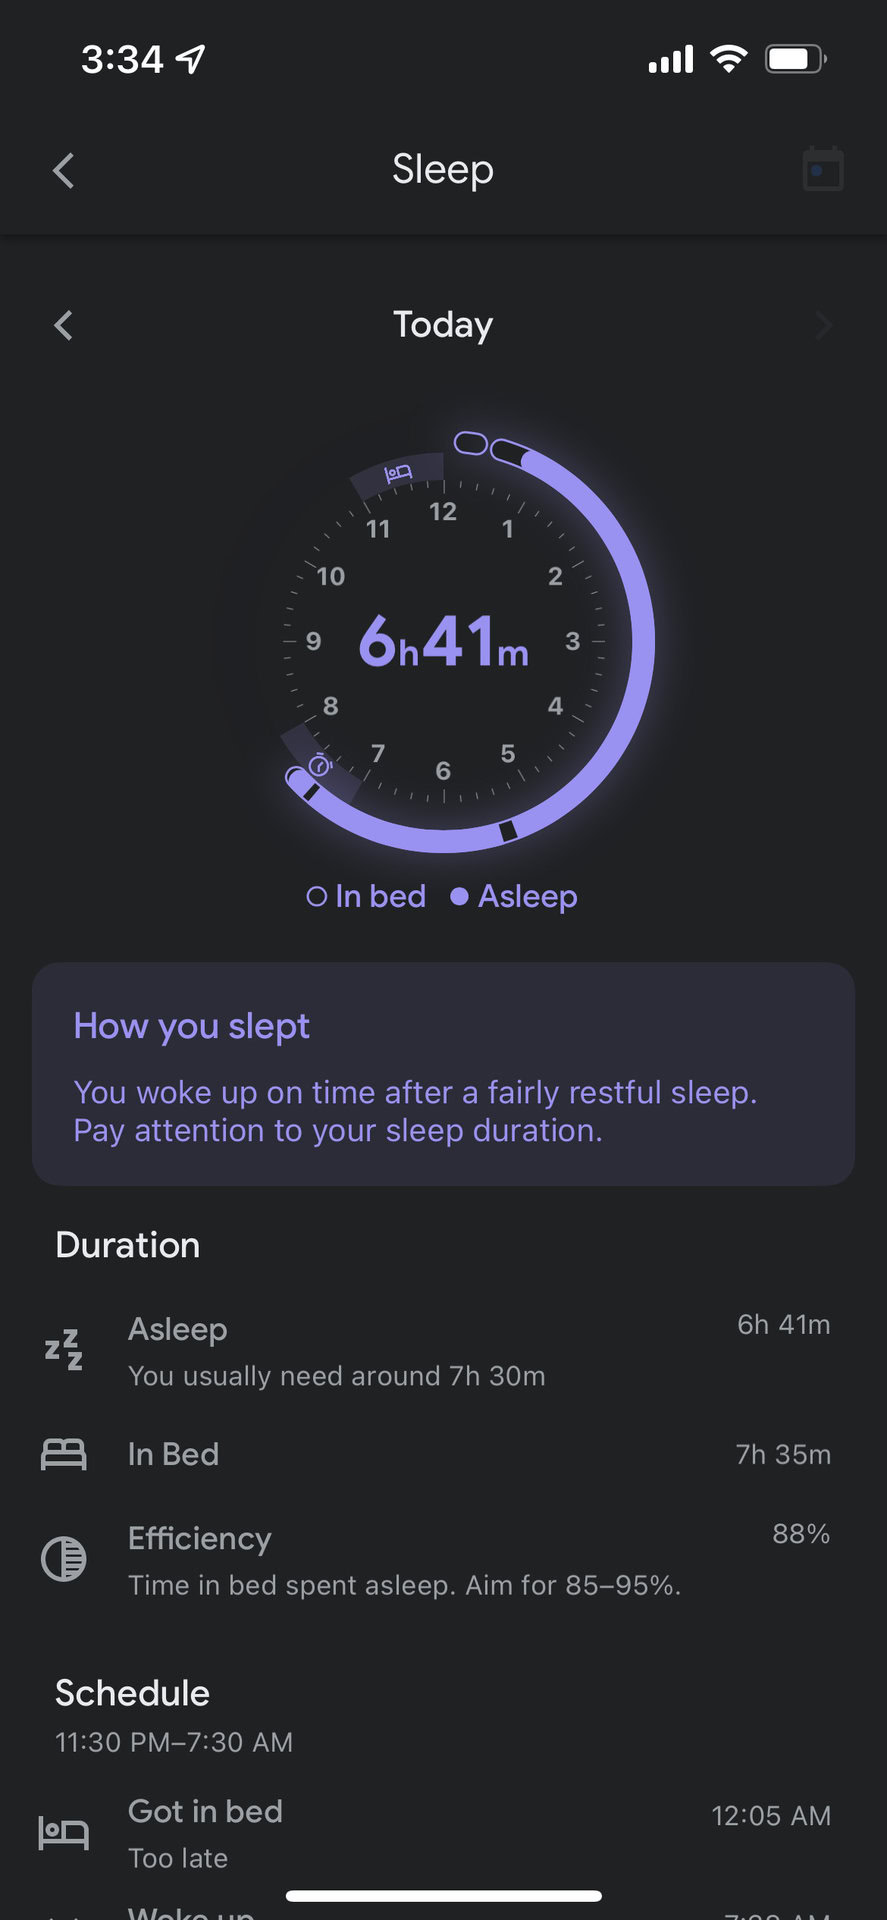 The Sleep Summary in Google Fit